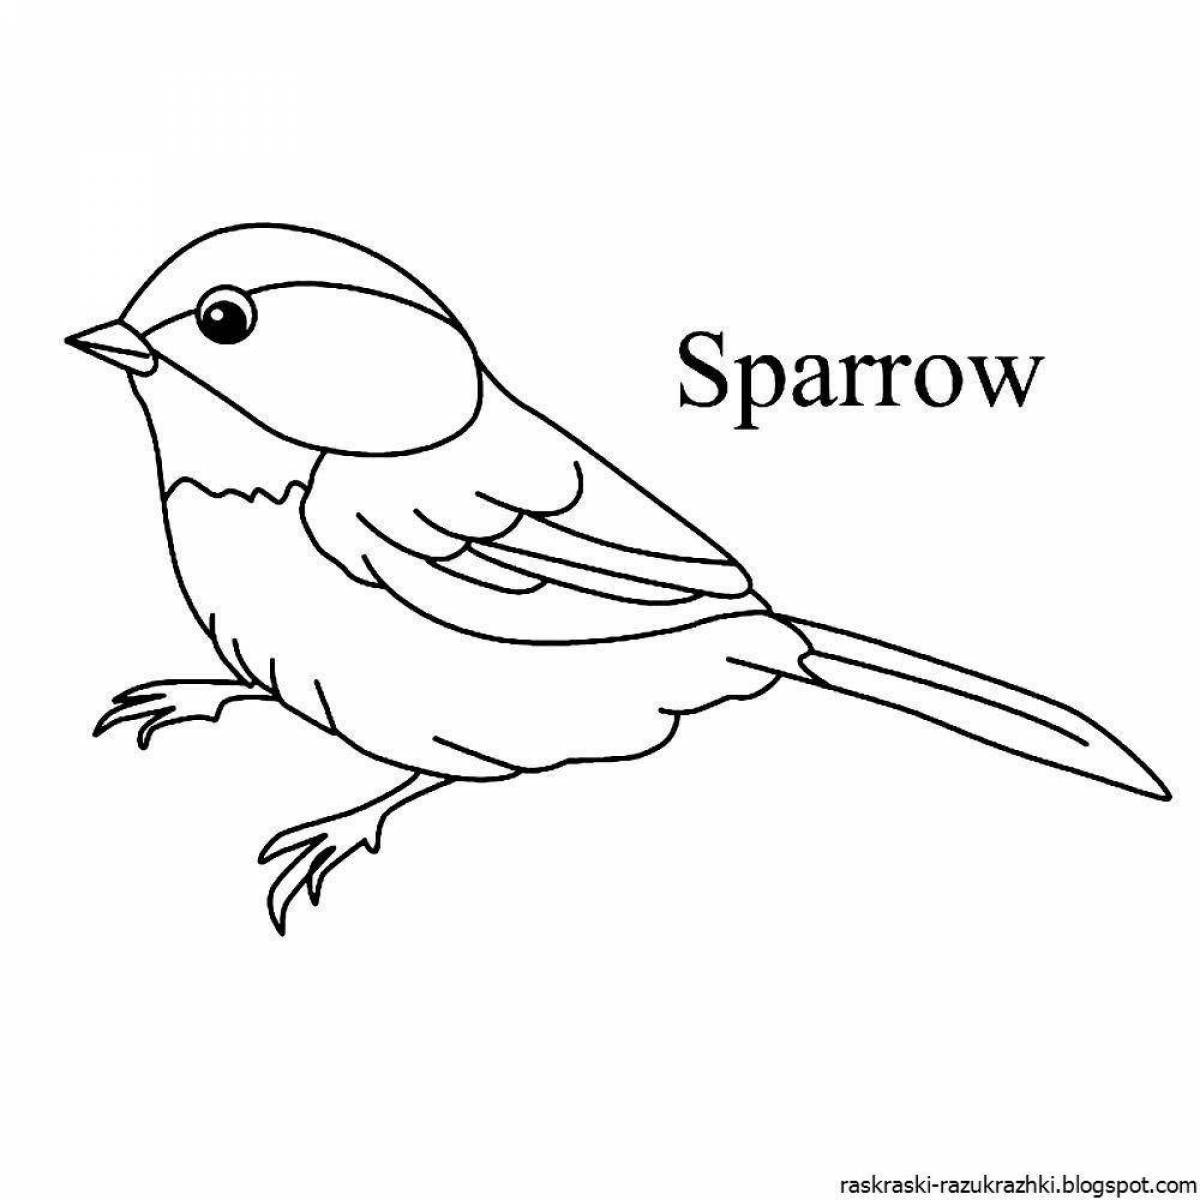 Colouring bright sparrow